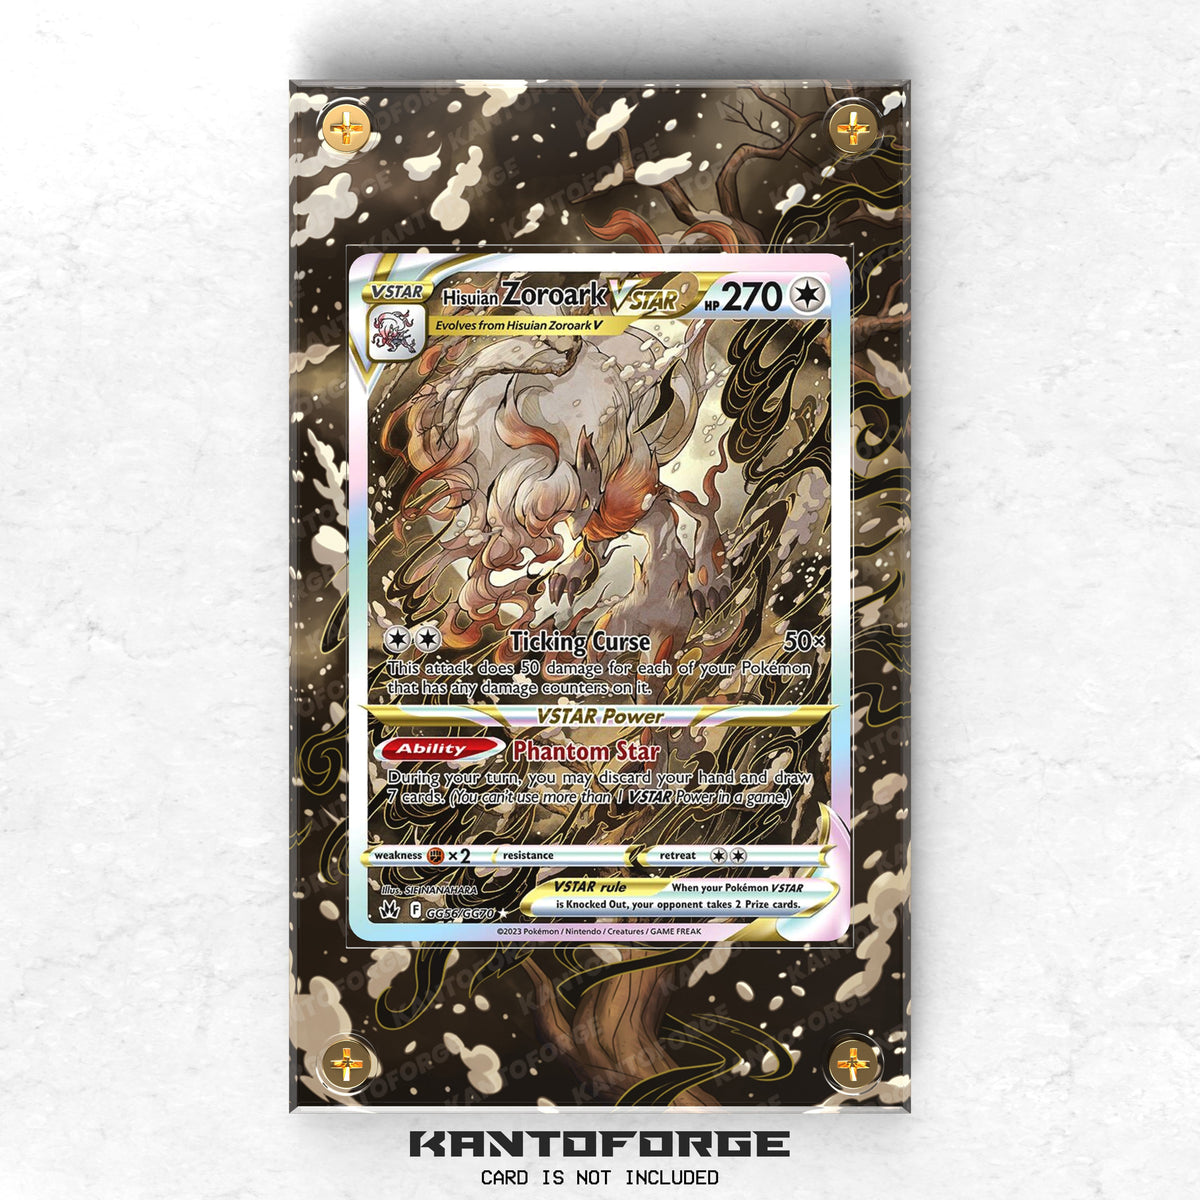 Hisuian Zoroark VSTAR GG56/GG70  - Pokémon Extended Artwork Protective Card Display Case